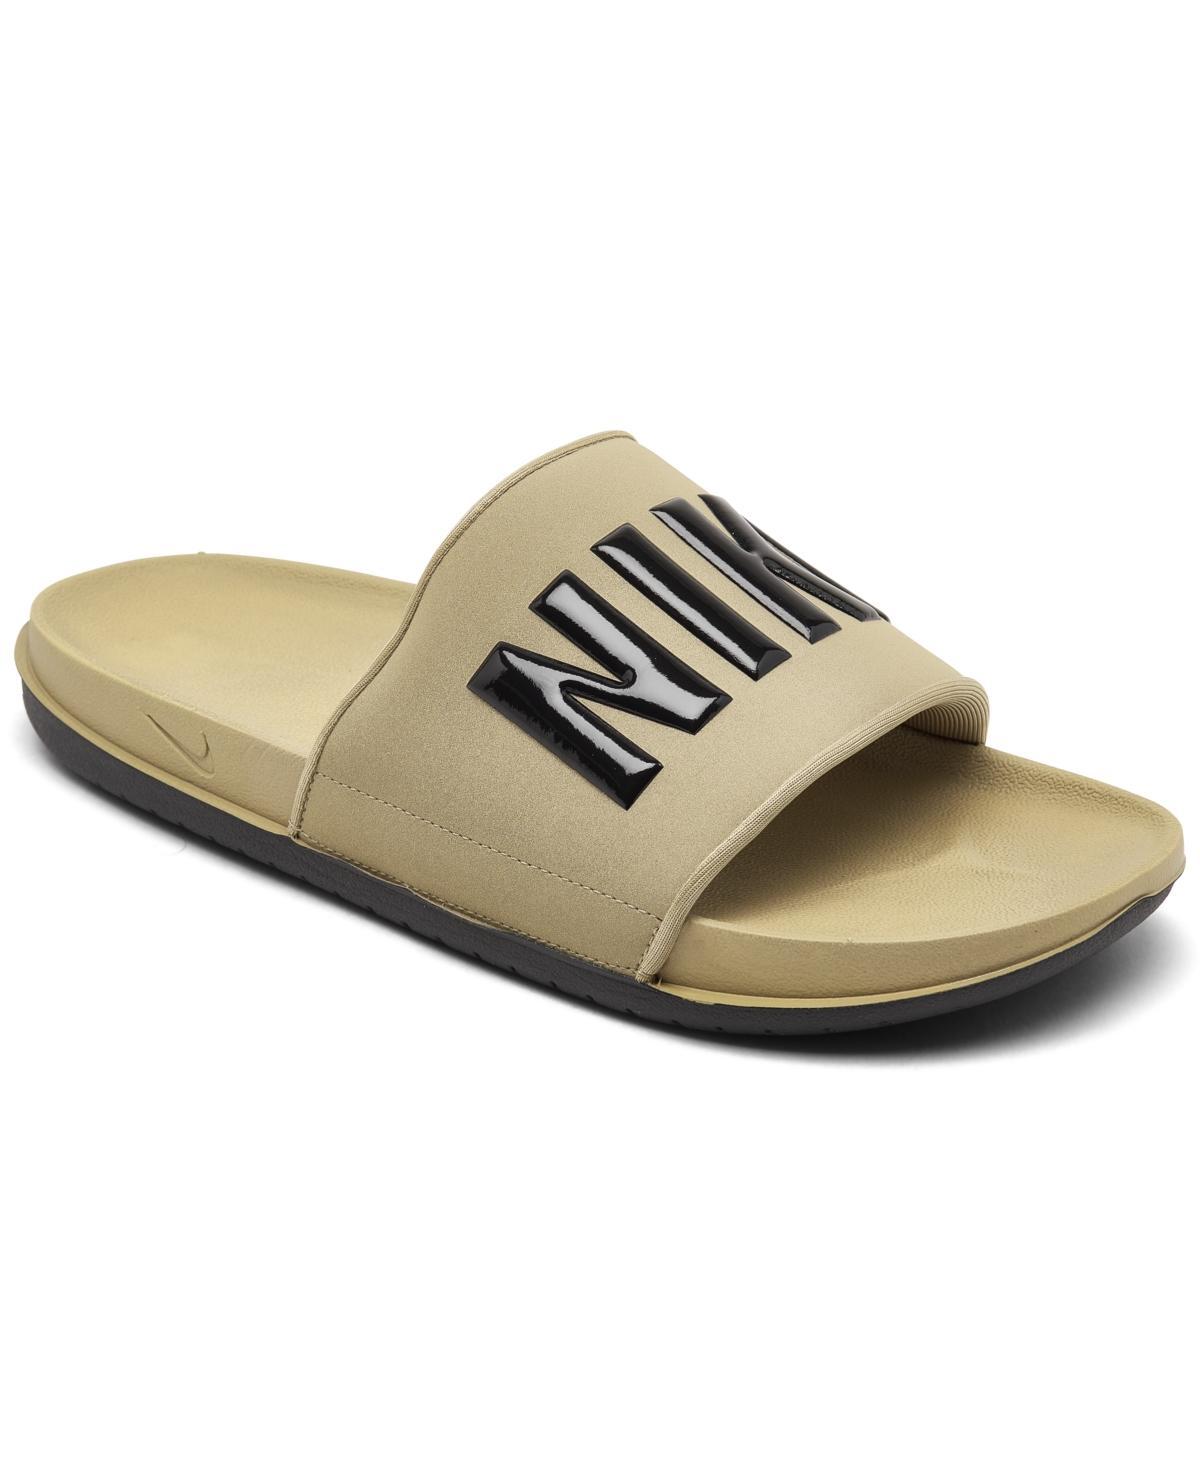 Nike Offcourt Mens Slide Sandals Product Image